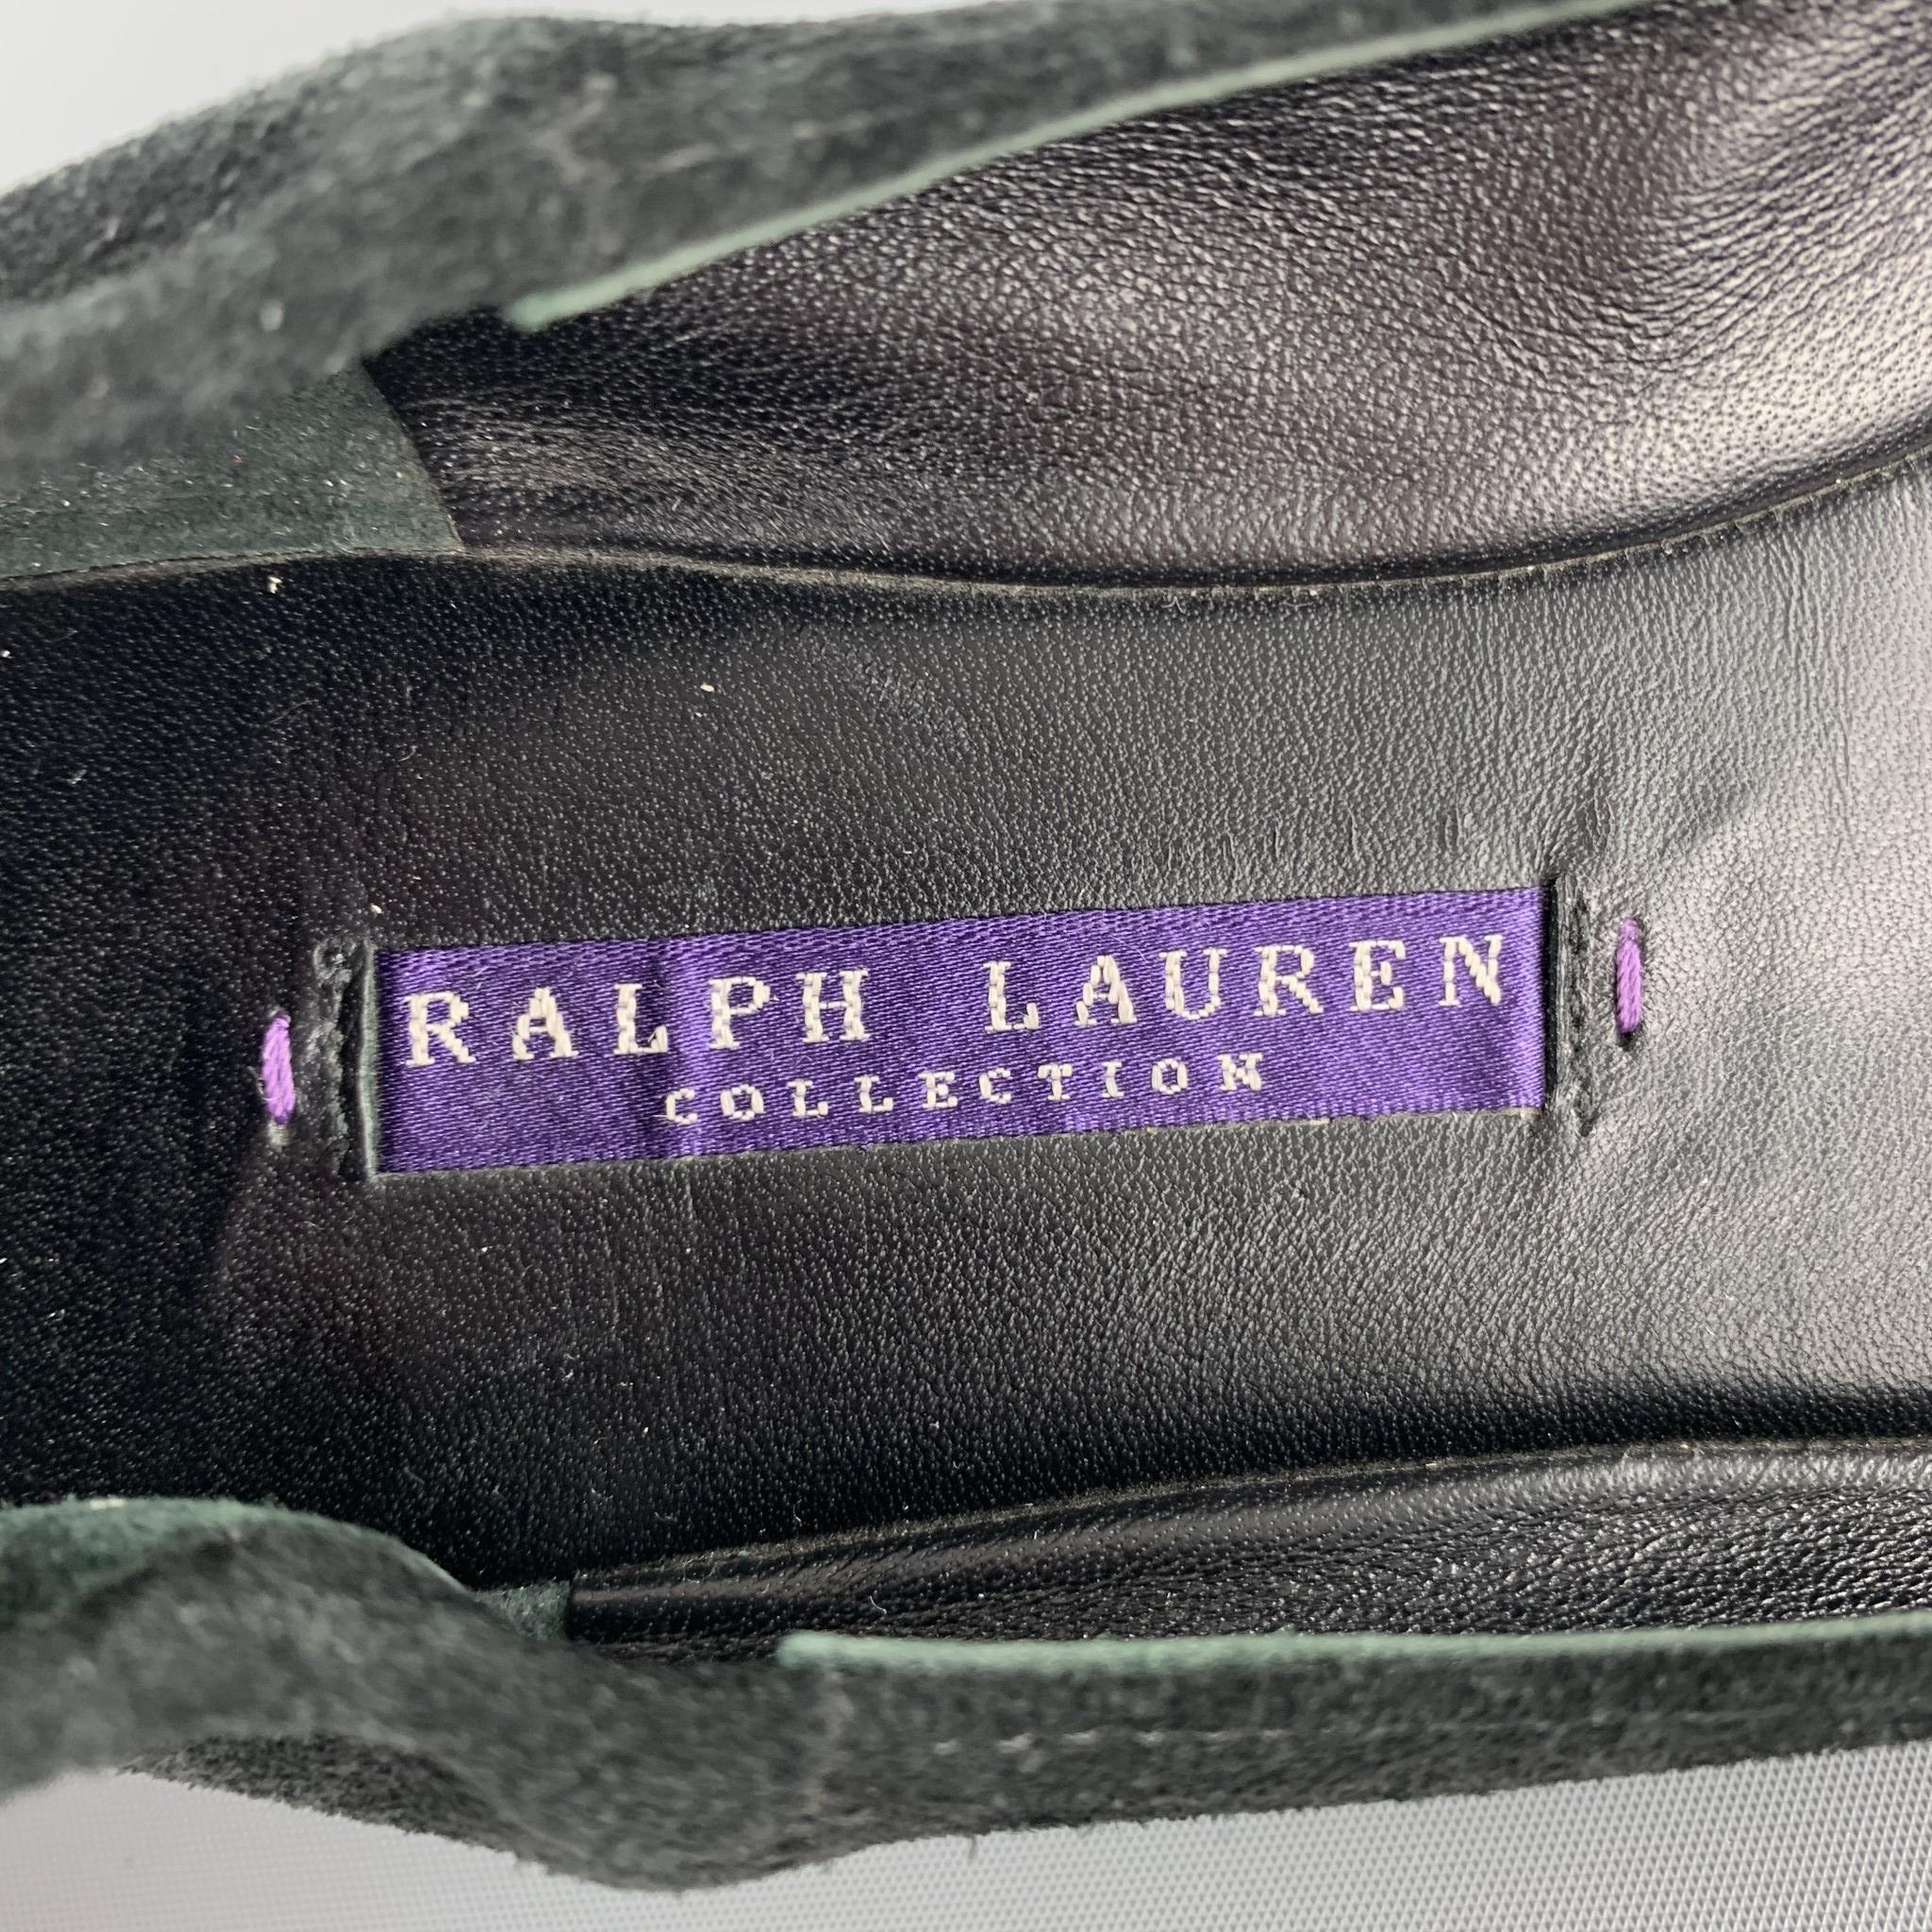 RALPH LAUREN COLLECTION Size 7 Black Suede Bow Flats 2